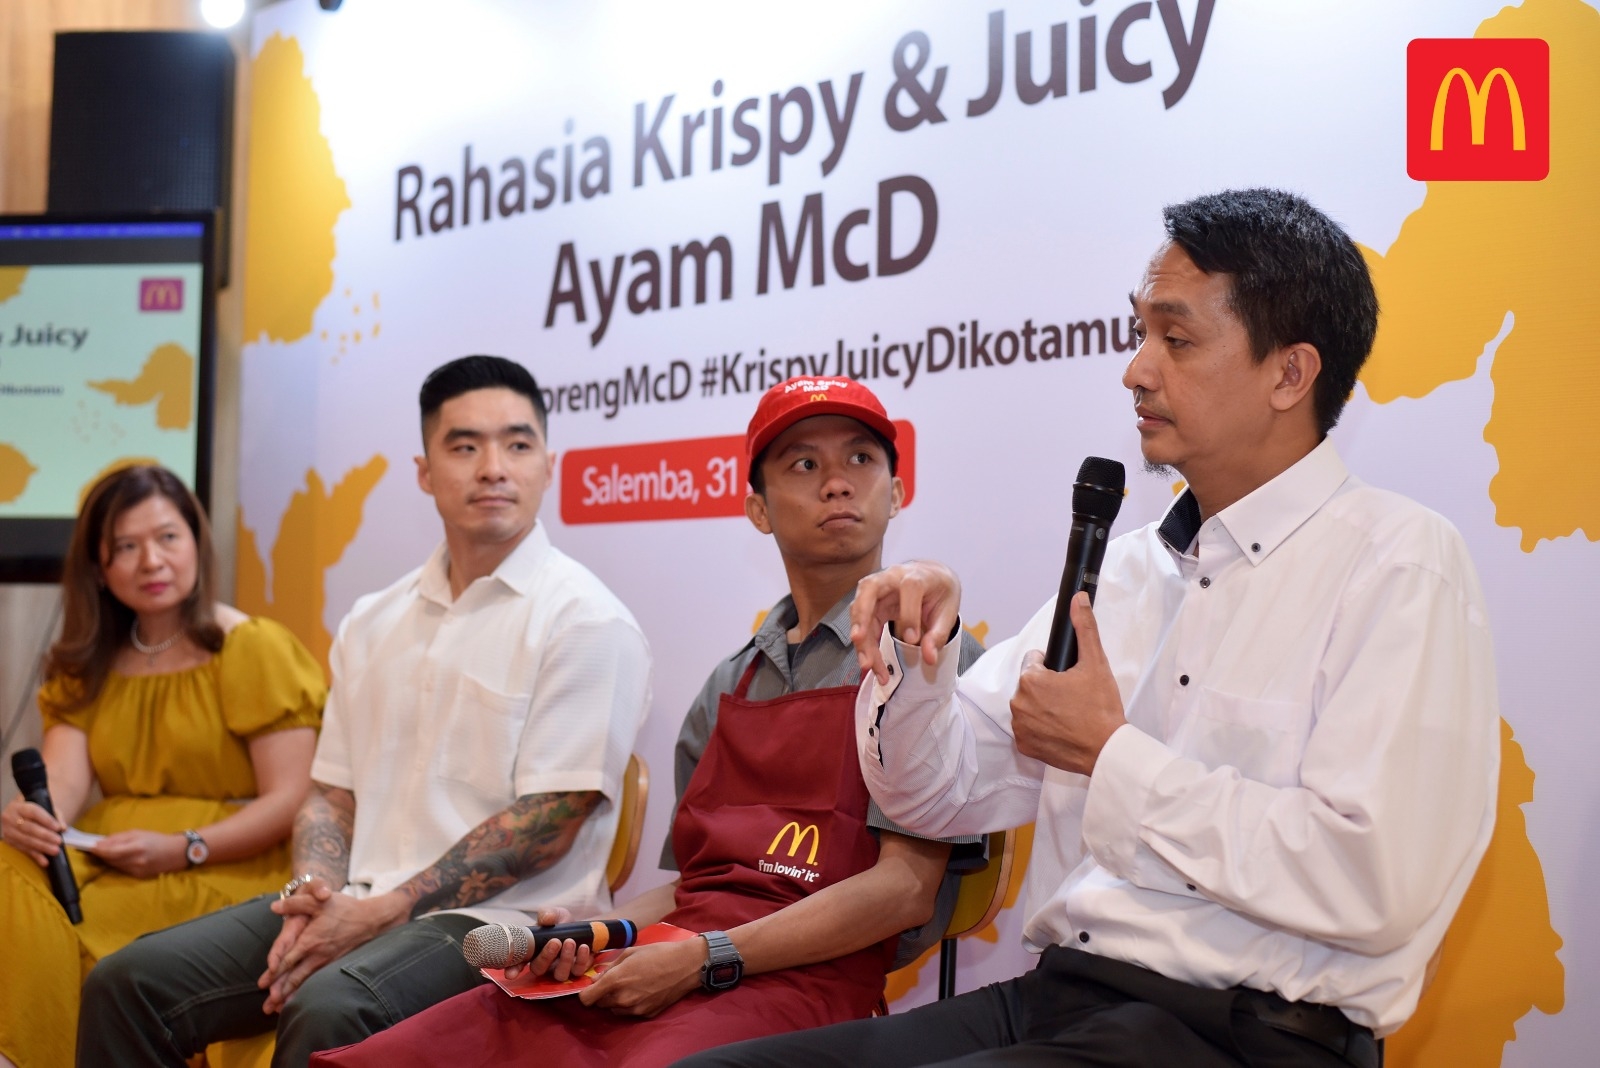 McDonald's Adakan Open Kitchen, Ungkap Rahasia Ayam Krispi dan Juicy